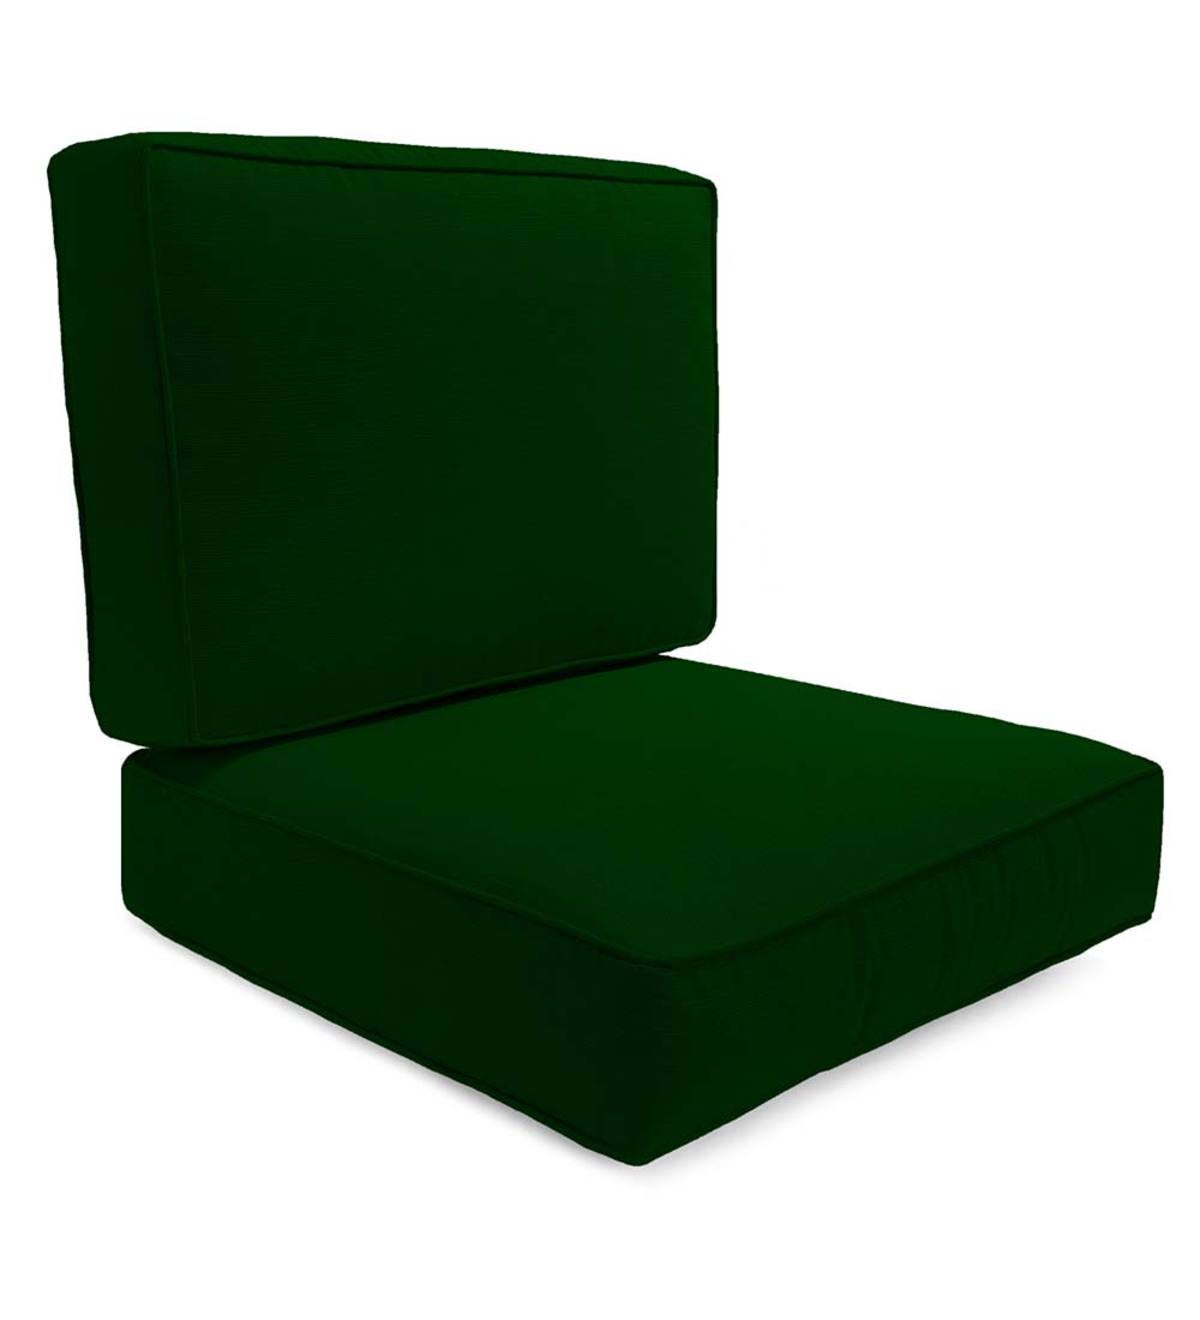 Champlin Chair Cushion - Blue Sky Fibers